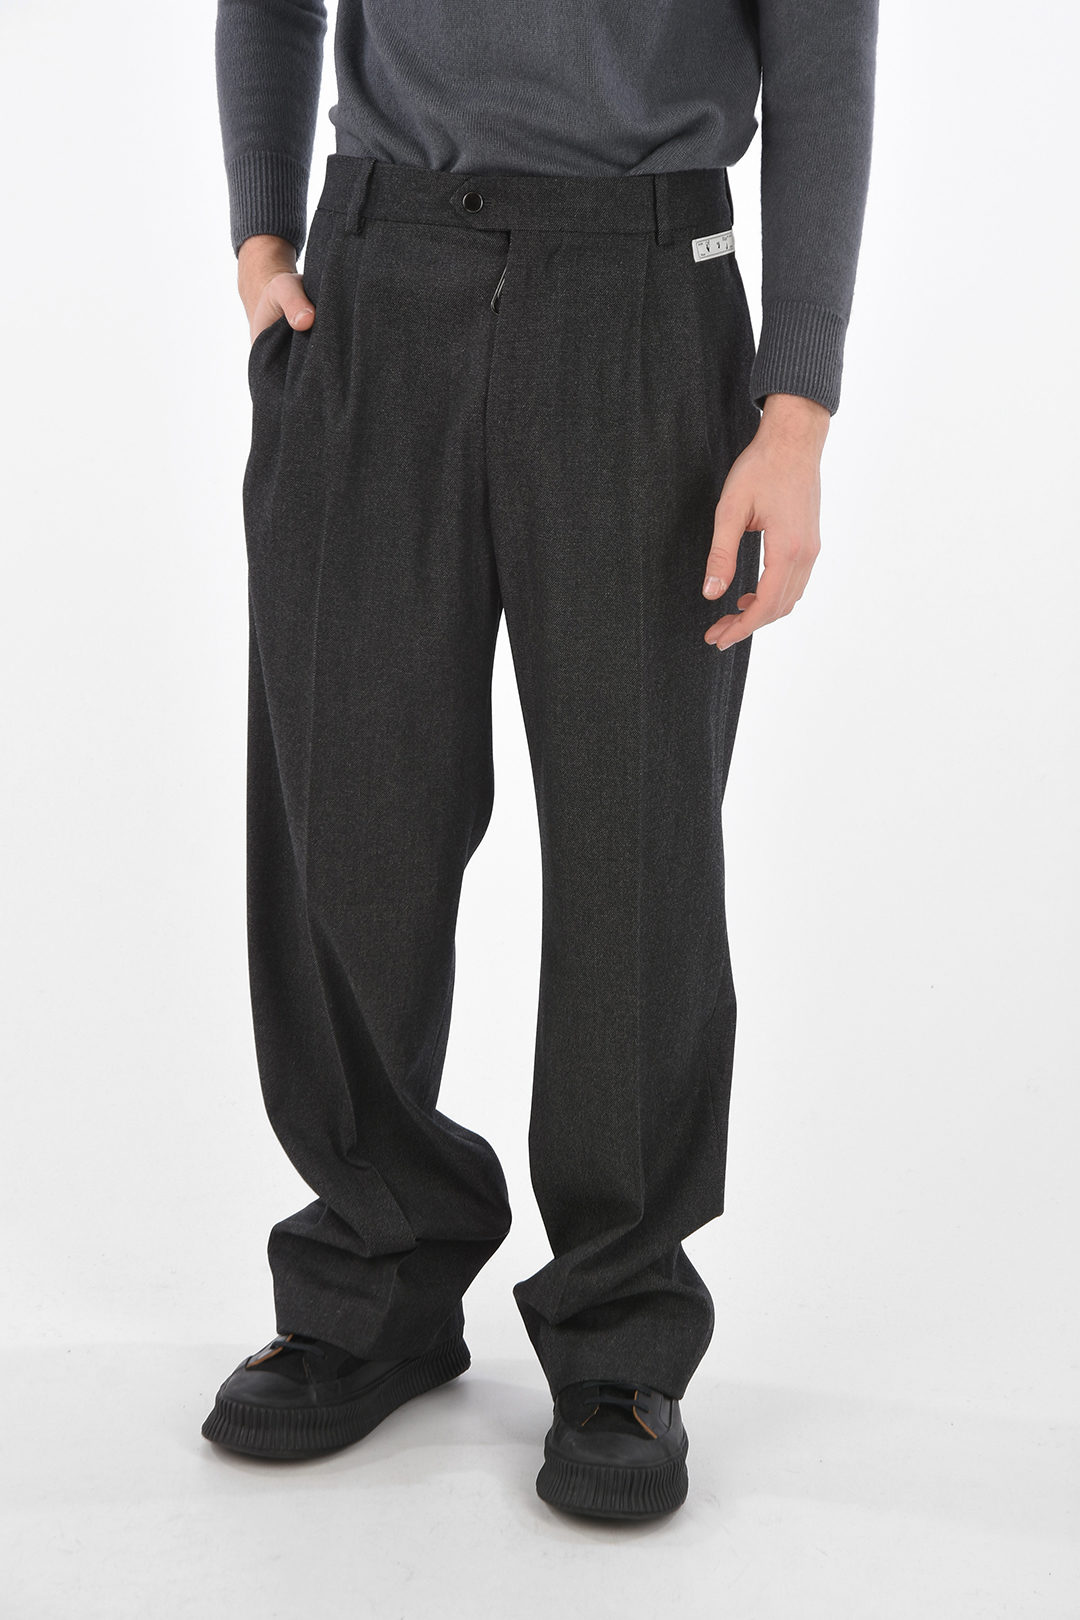 Ultra Light Merino Wool Leggings - Breathable Underwear Pants - Soft Long  Johns | eBay